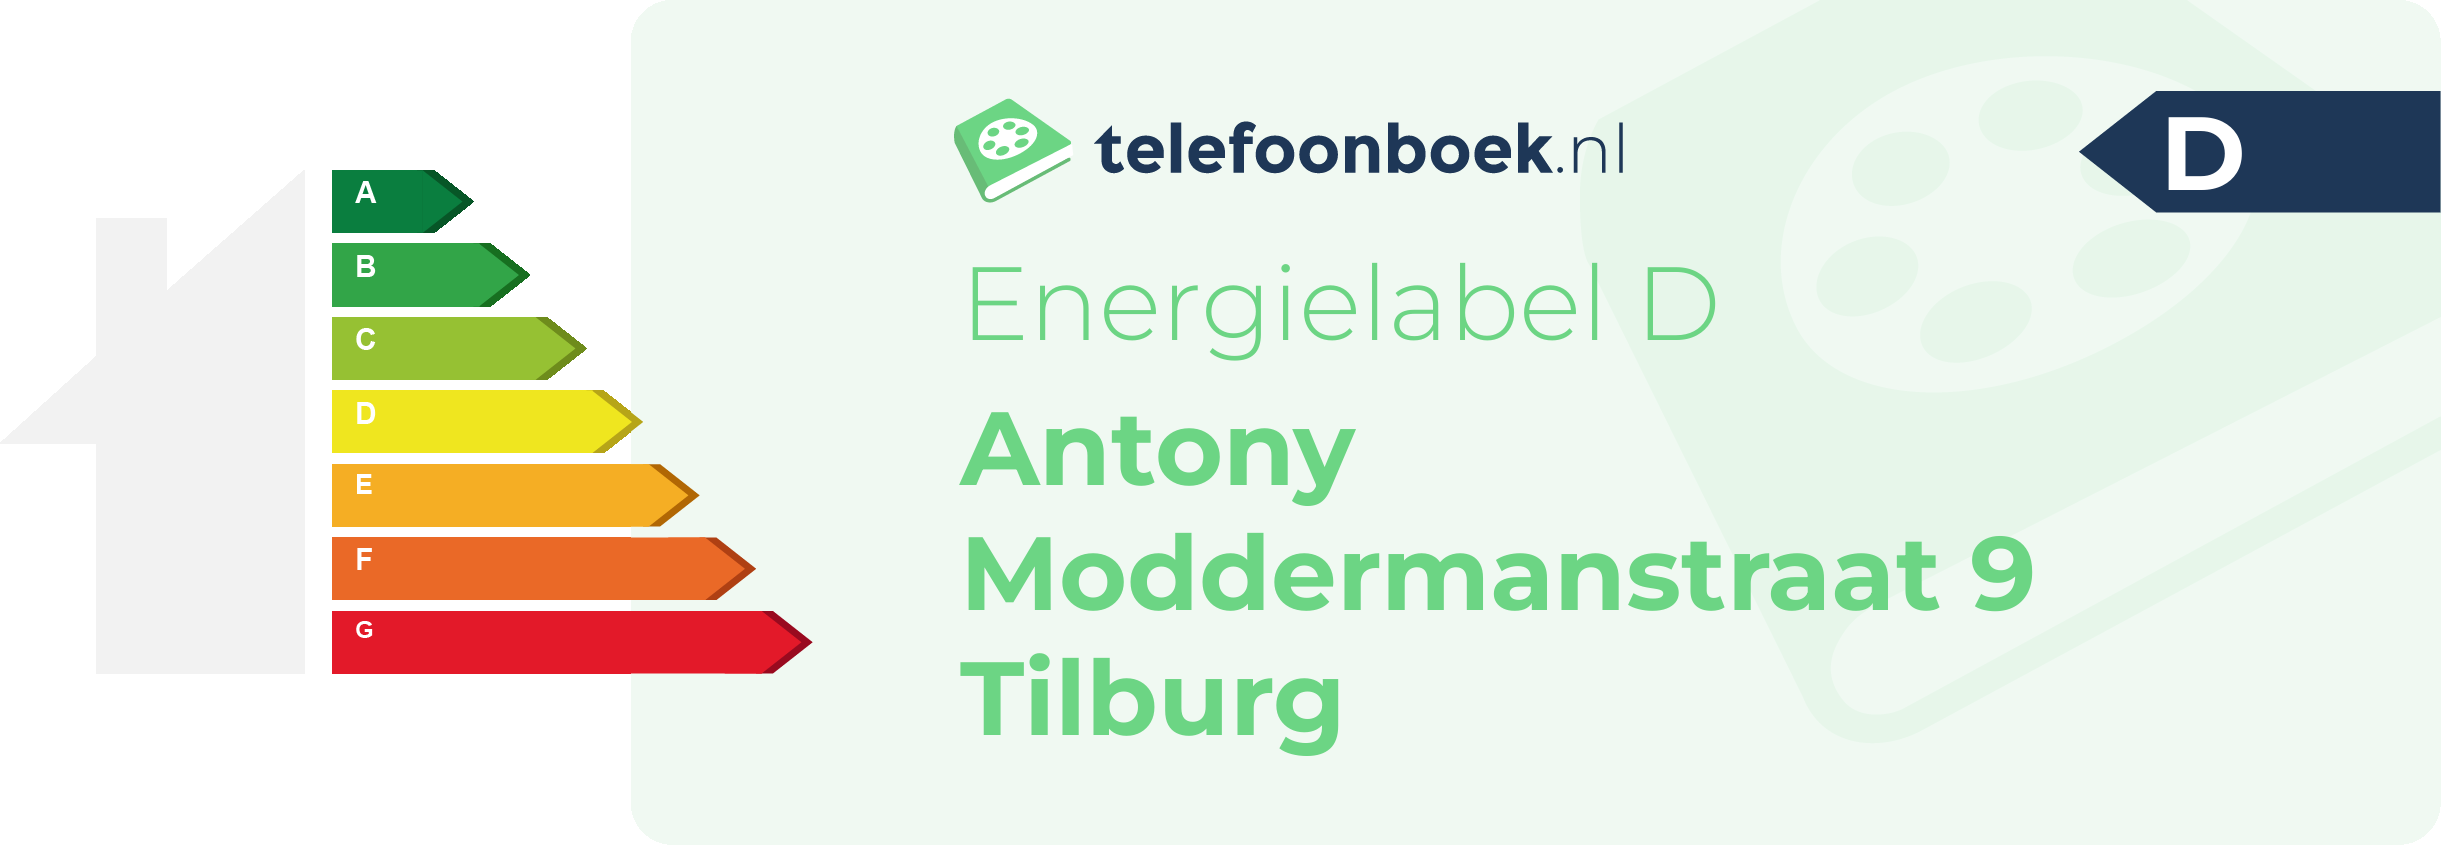 Energielabel Antony Moddermanstraat 9 Tilburg